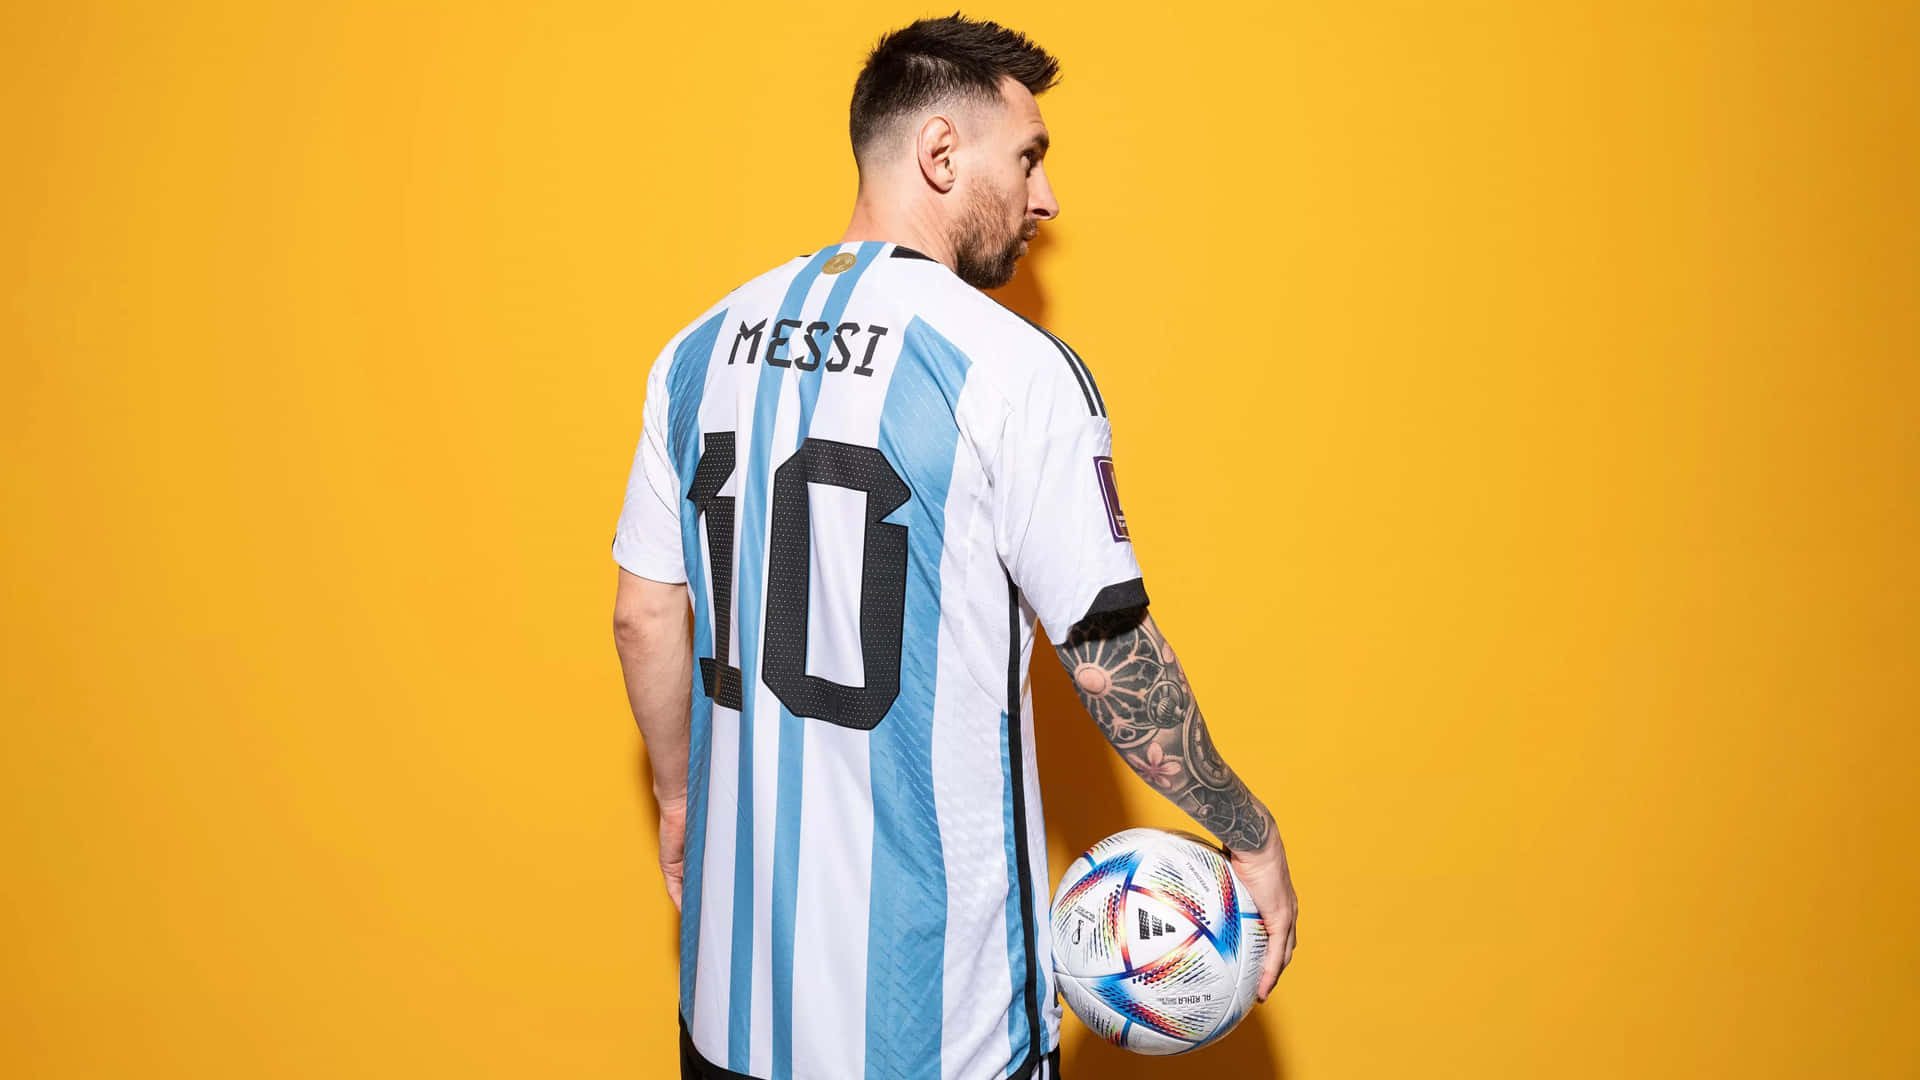 Messi Argentina Jersey Number10 Wallpaper